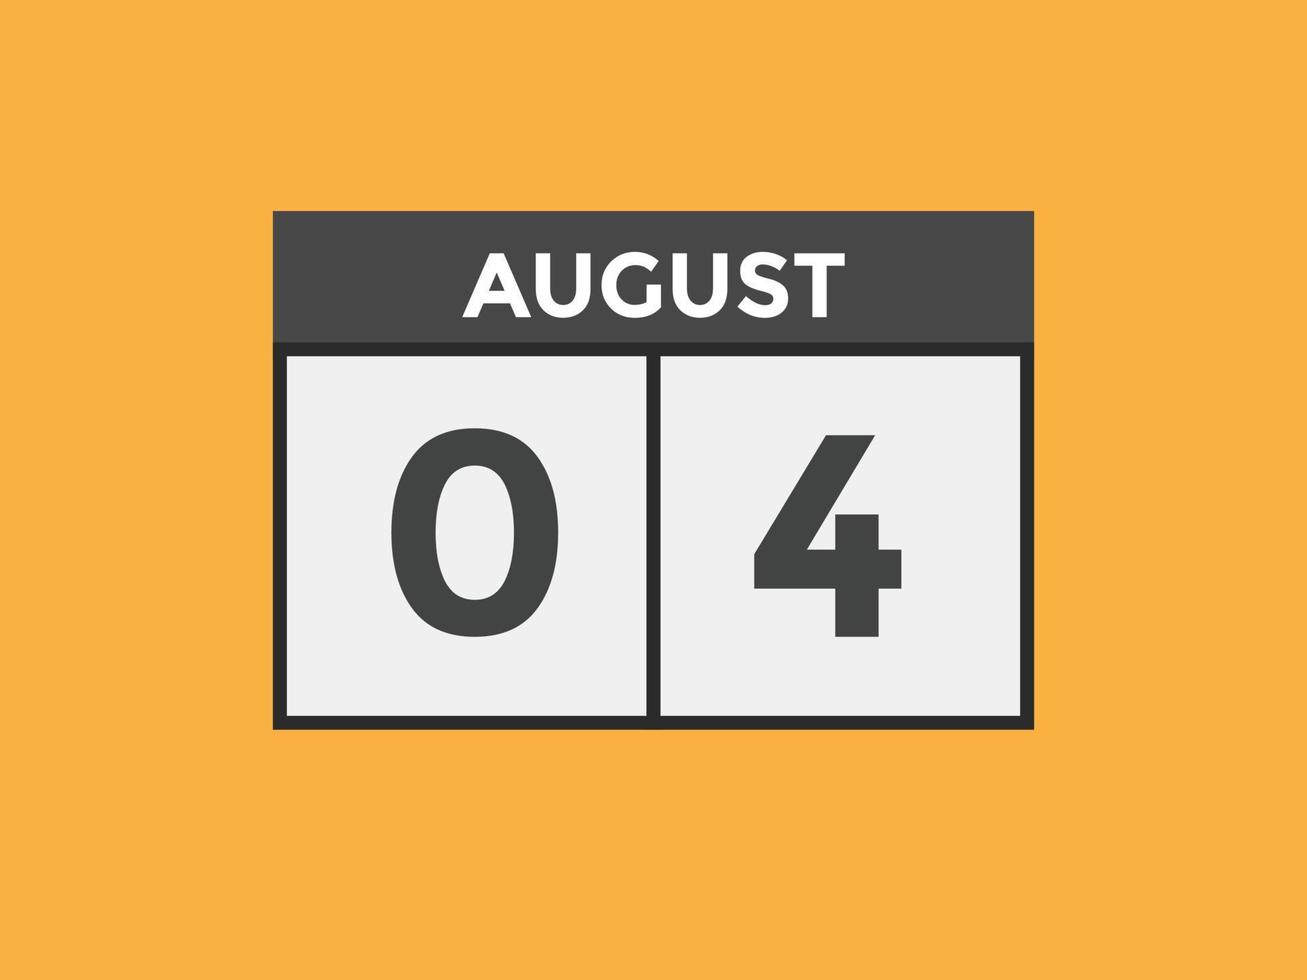 augusti 4 kalender påminnelse. 4:e augusti dagligen kalender ikon mall. kalender 4:e augusti ikon design mall. vektor illustration